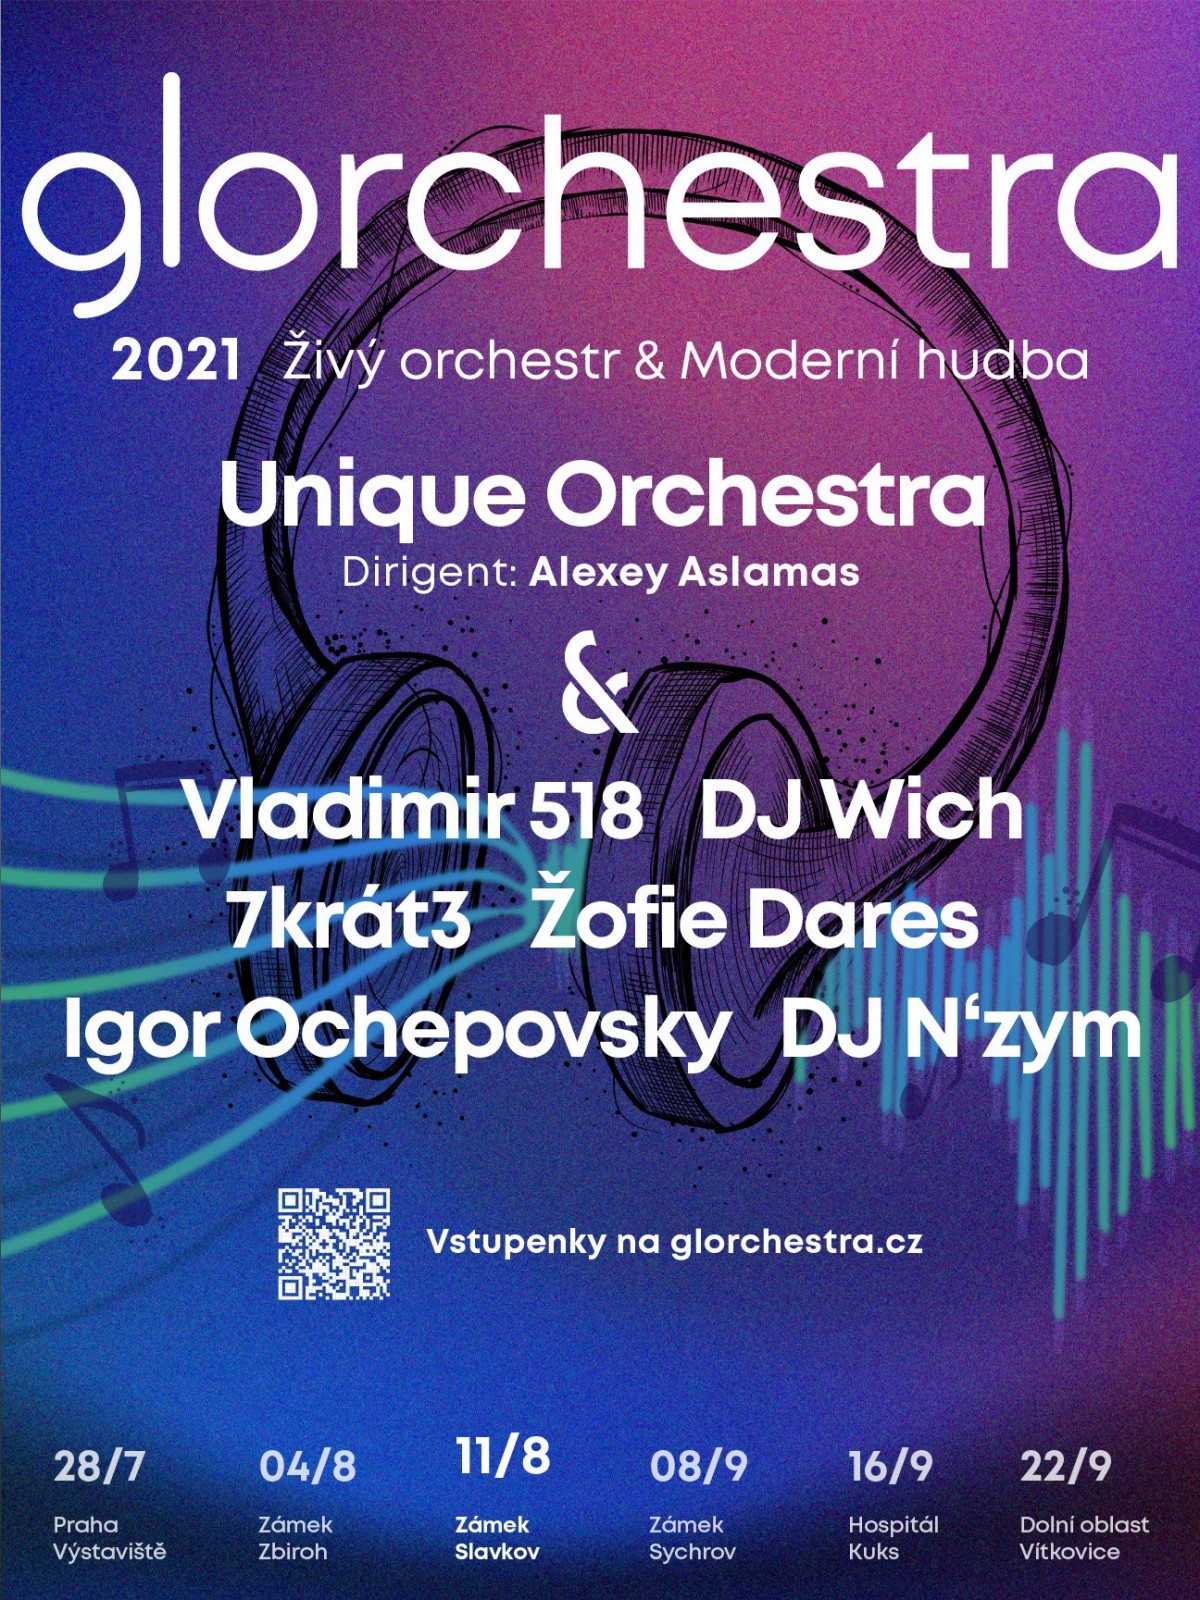 Glorchestra